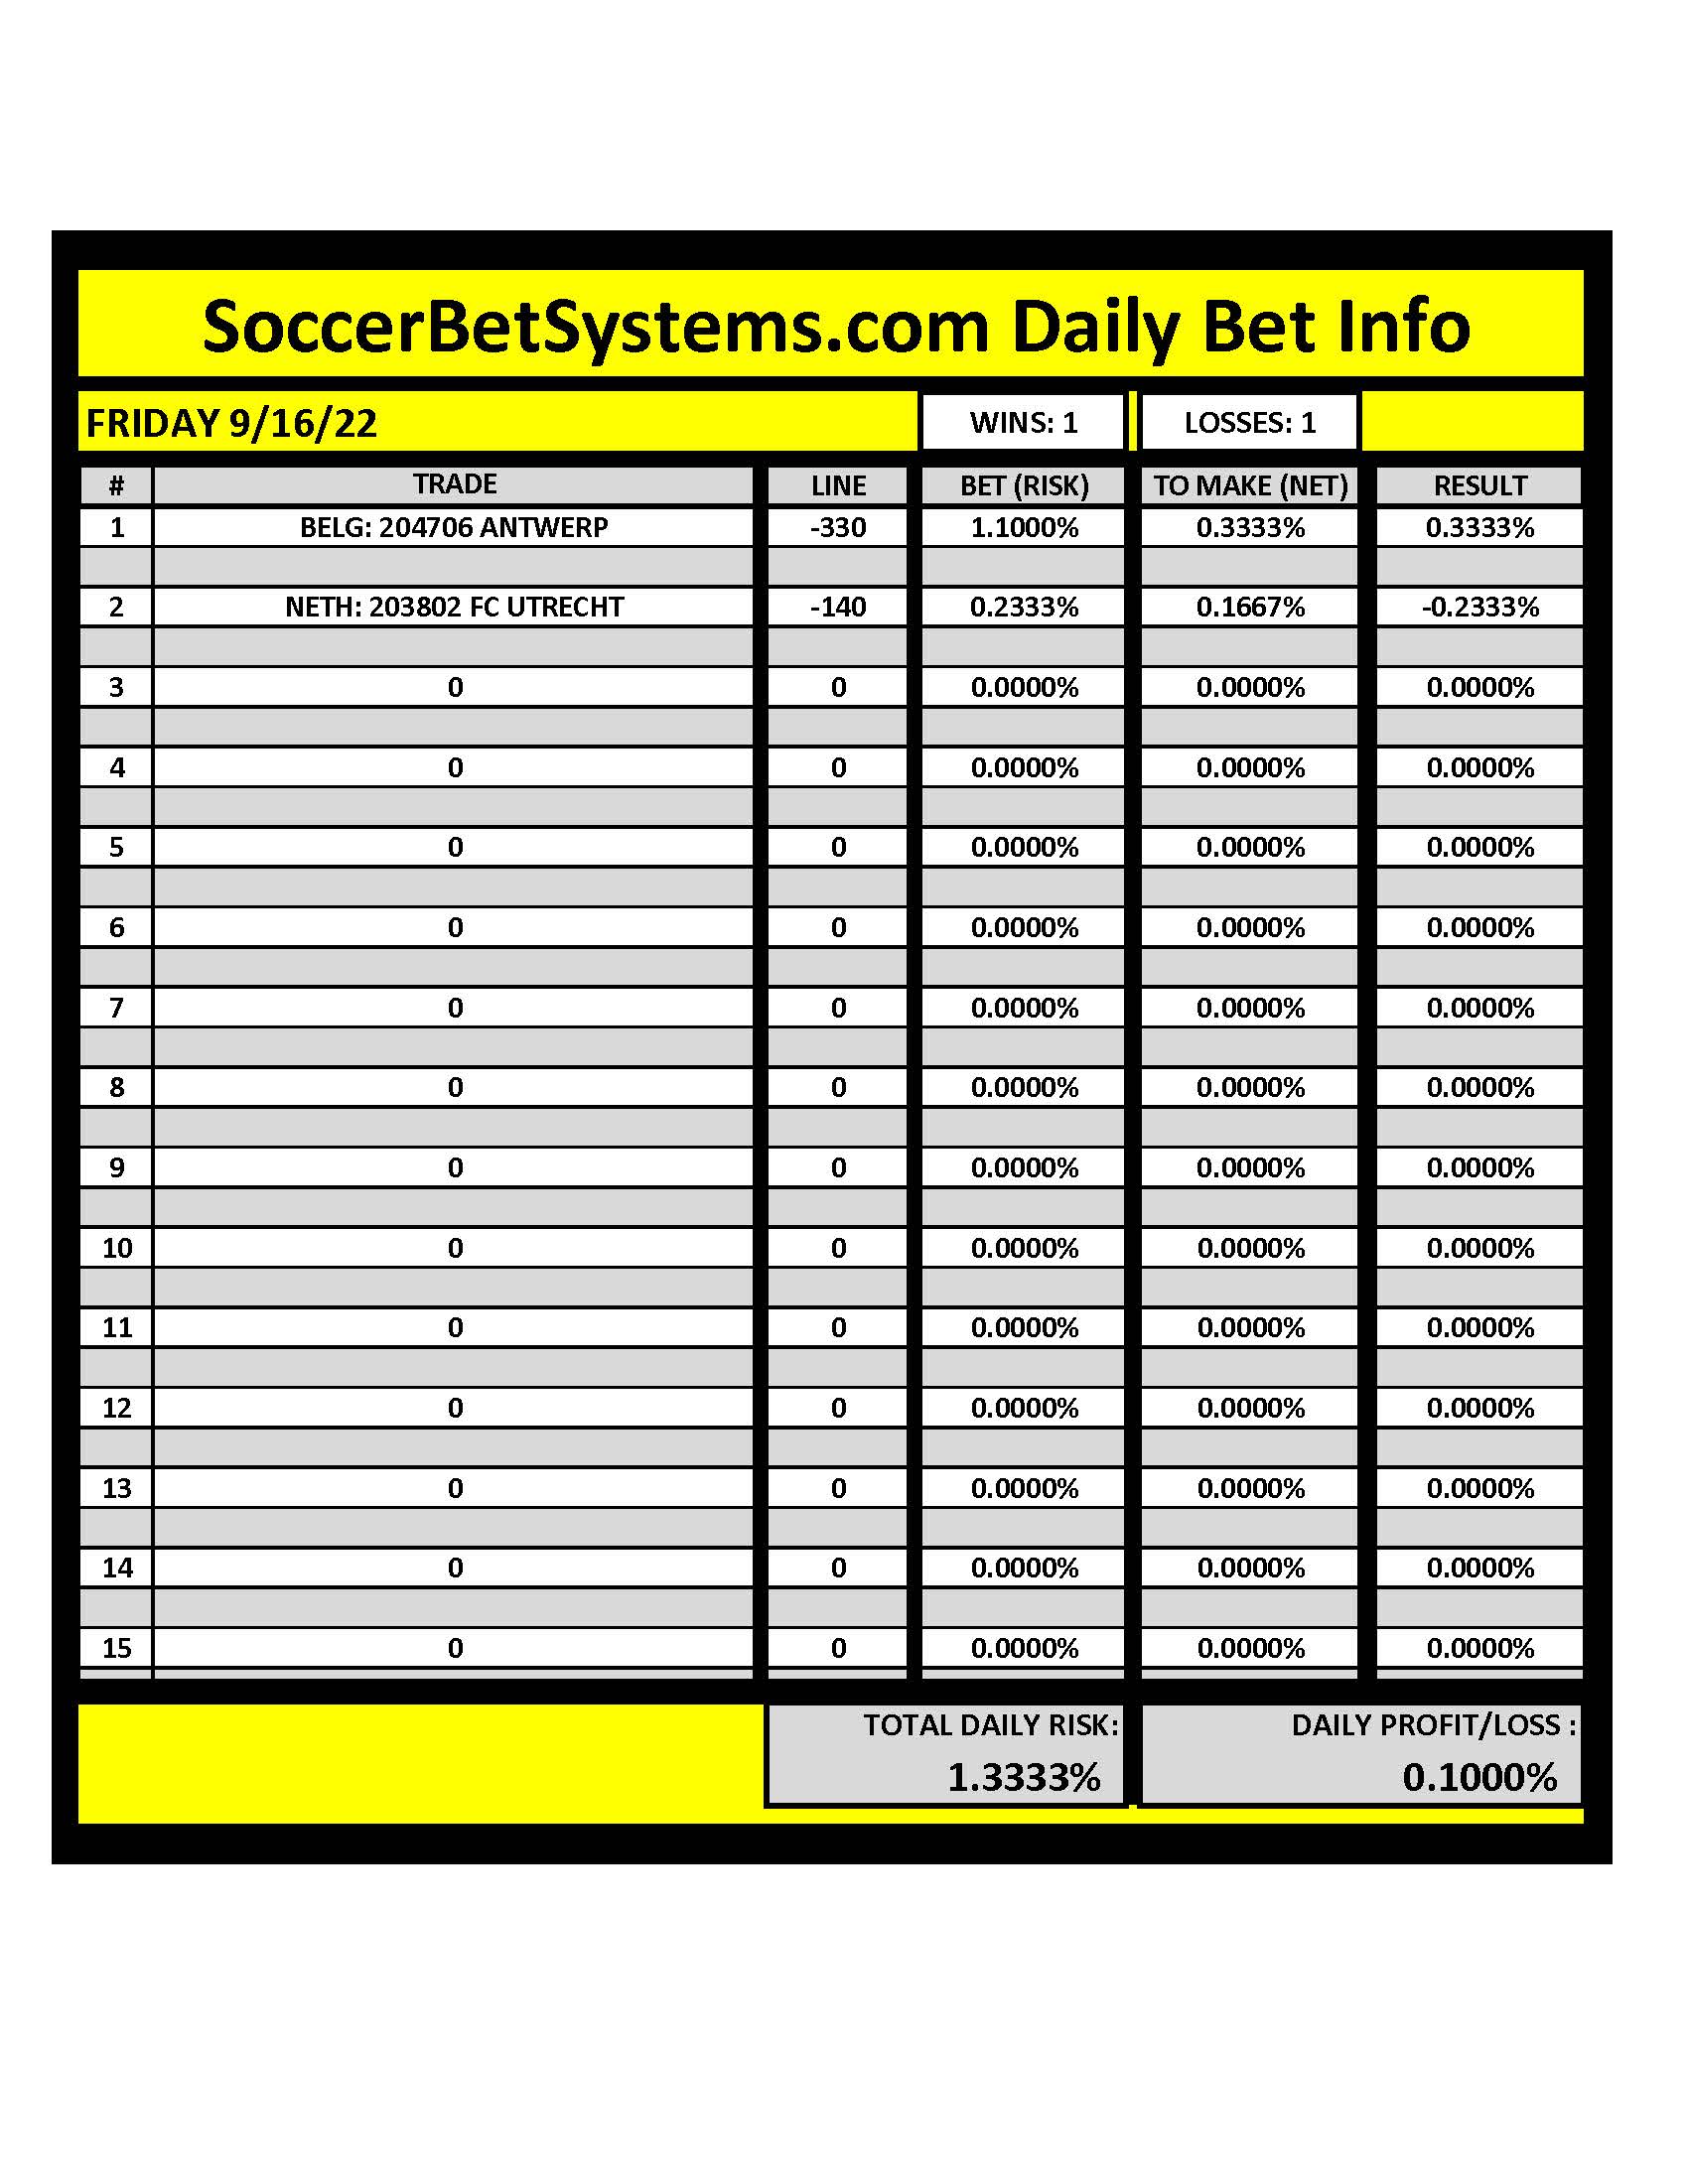 SoccerBetSystems.com 9/16/22 Daily Results